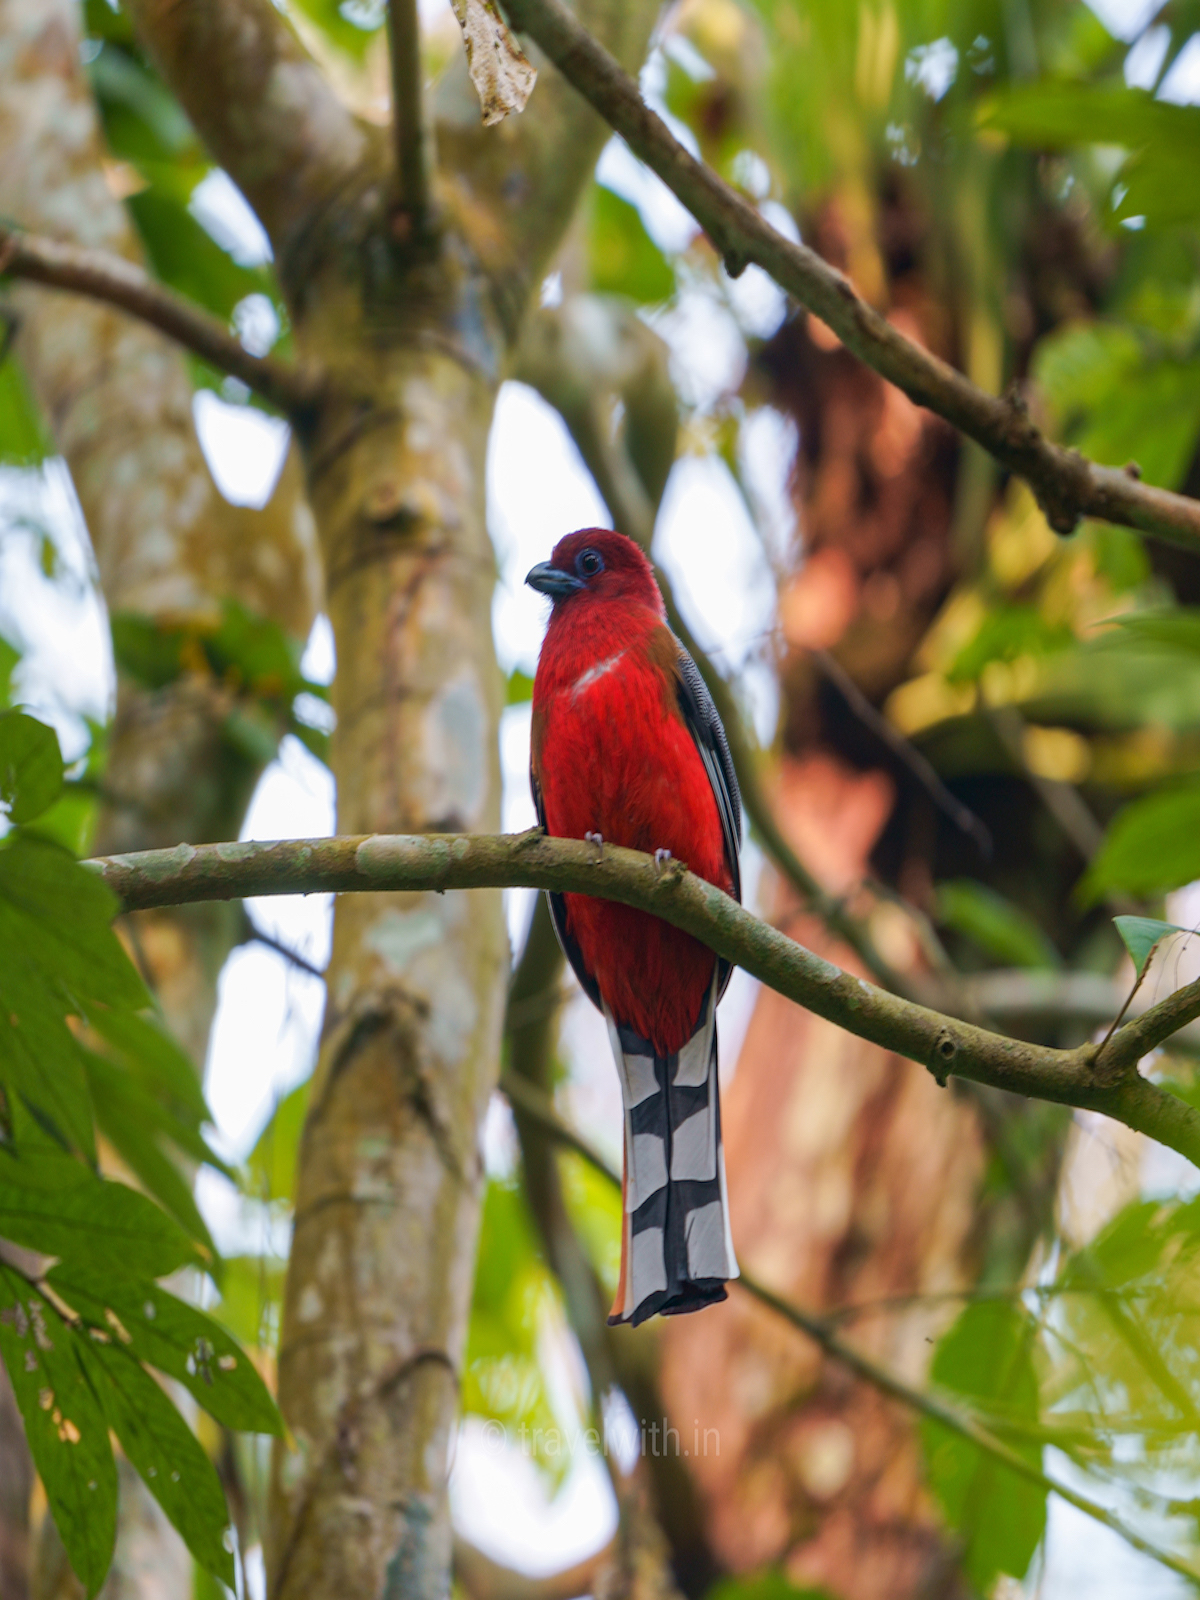 hoollongapar-gibbon-sanctuary-red-headed-trogon-travelwith